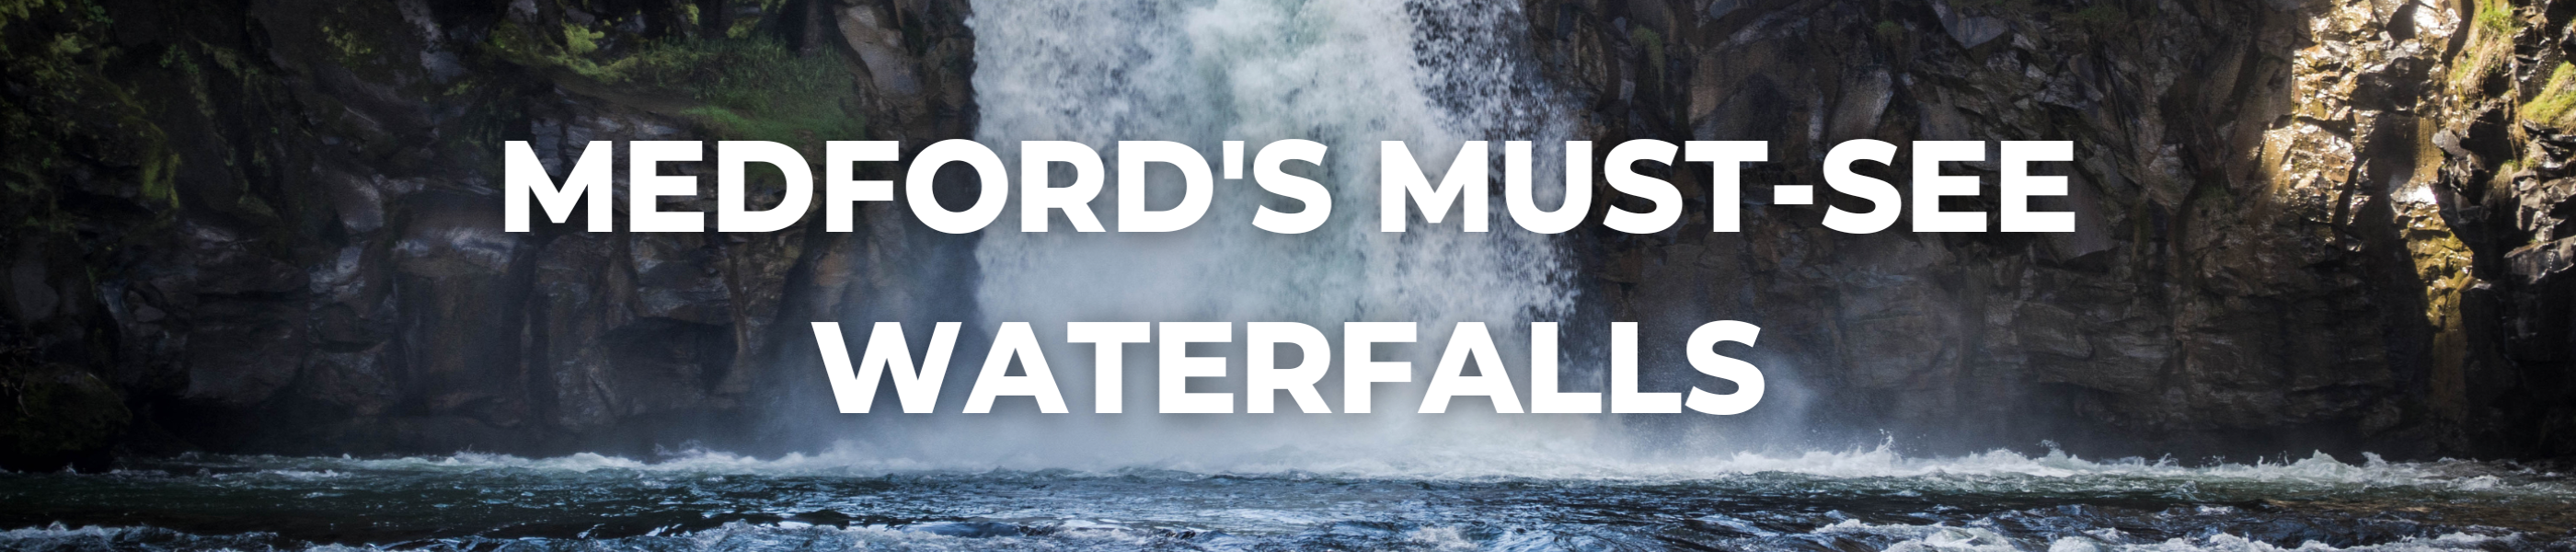 blog header, medford's must-see waterfalls